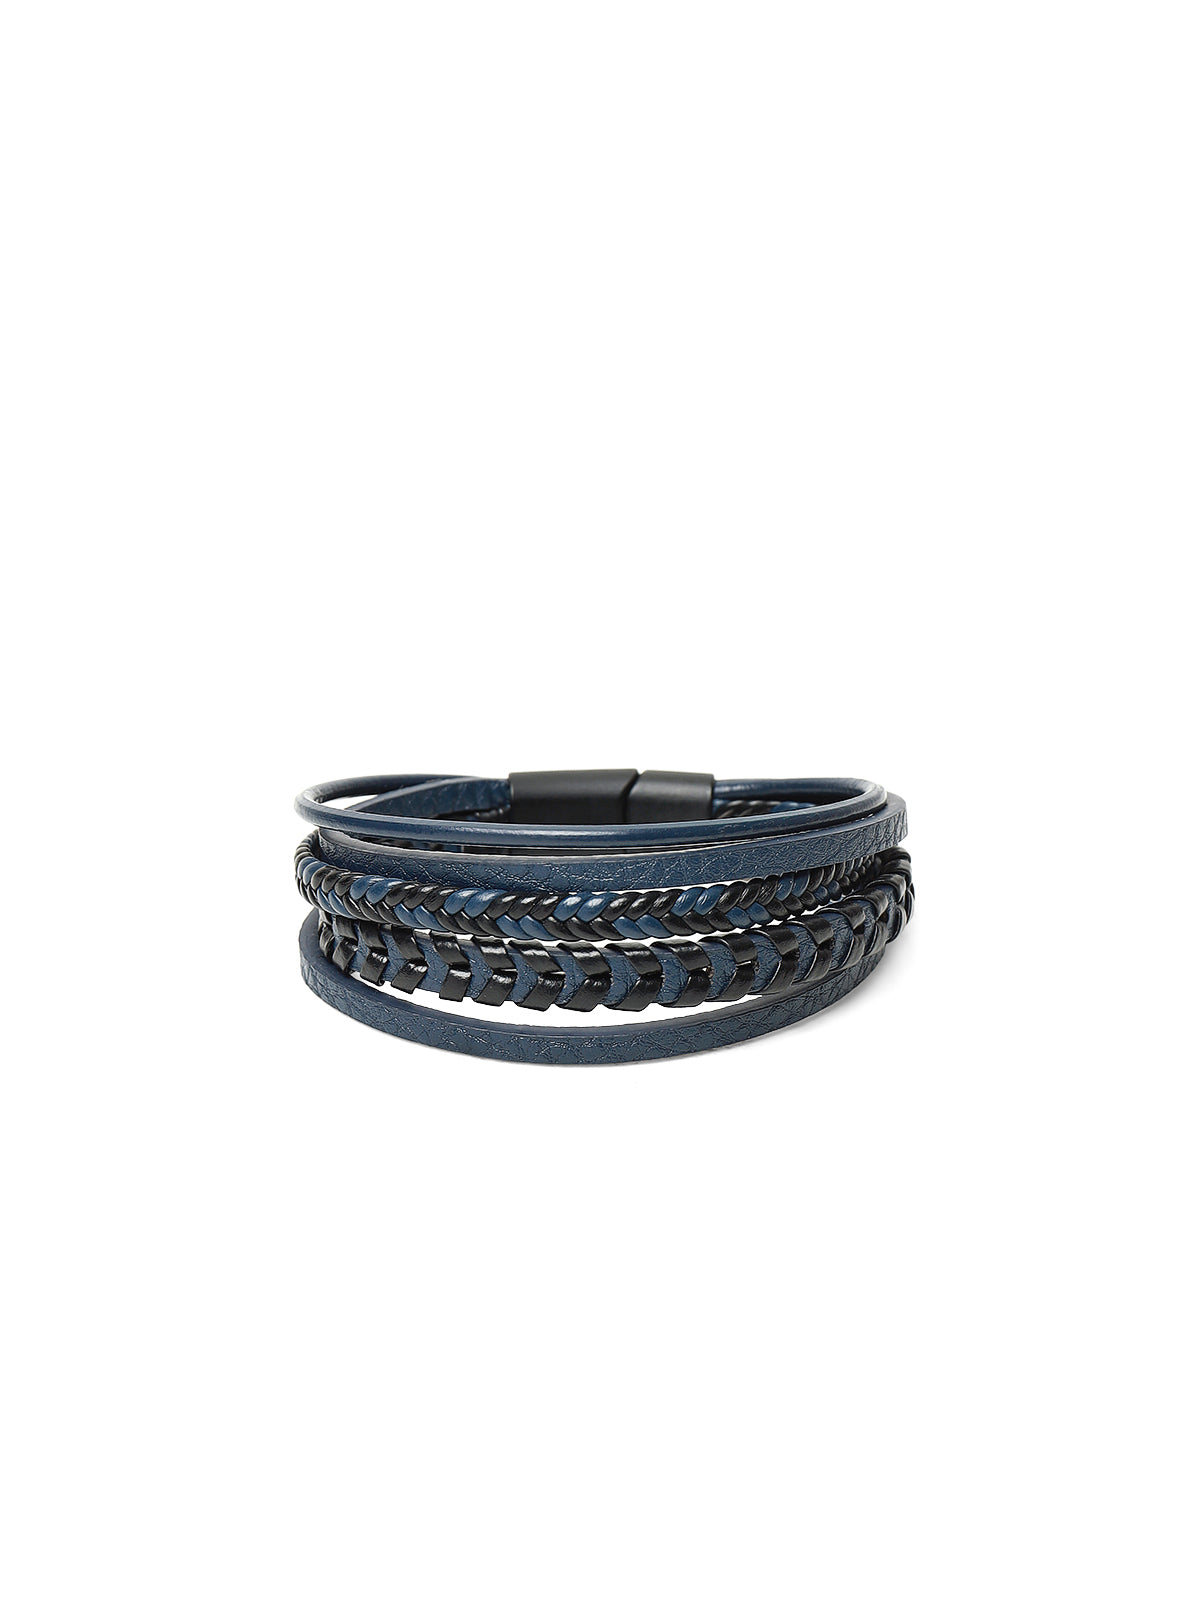 Blue Leather Bracelet - FABR24-013